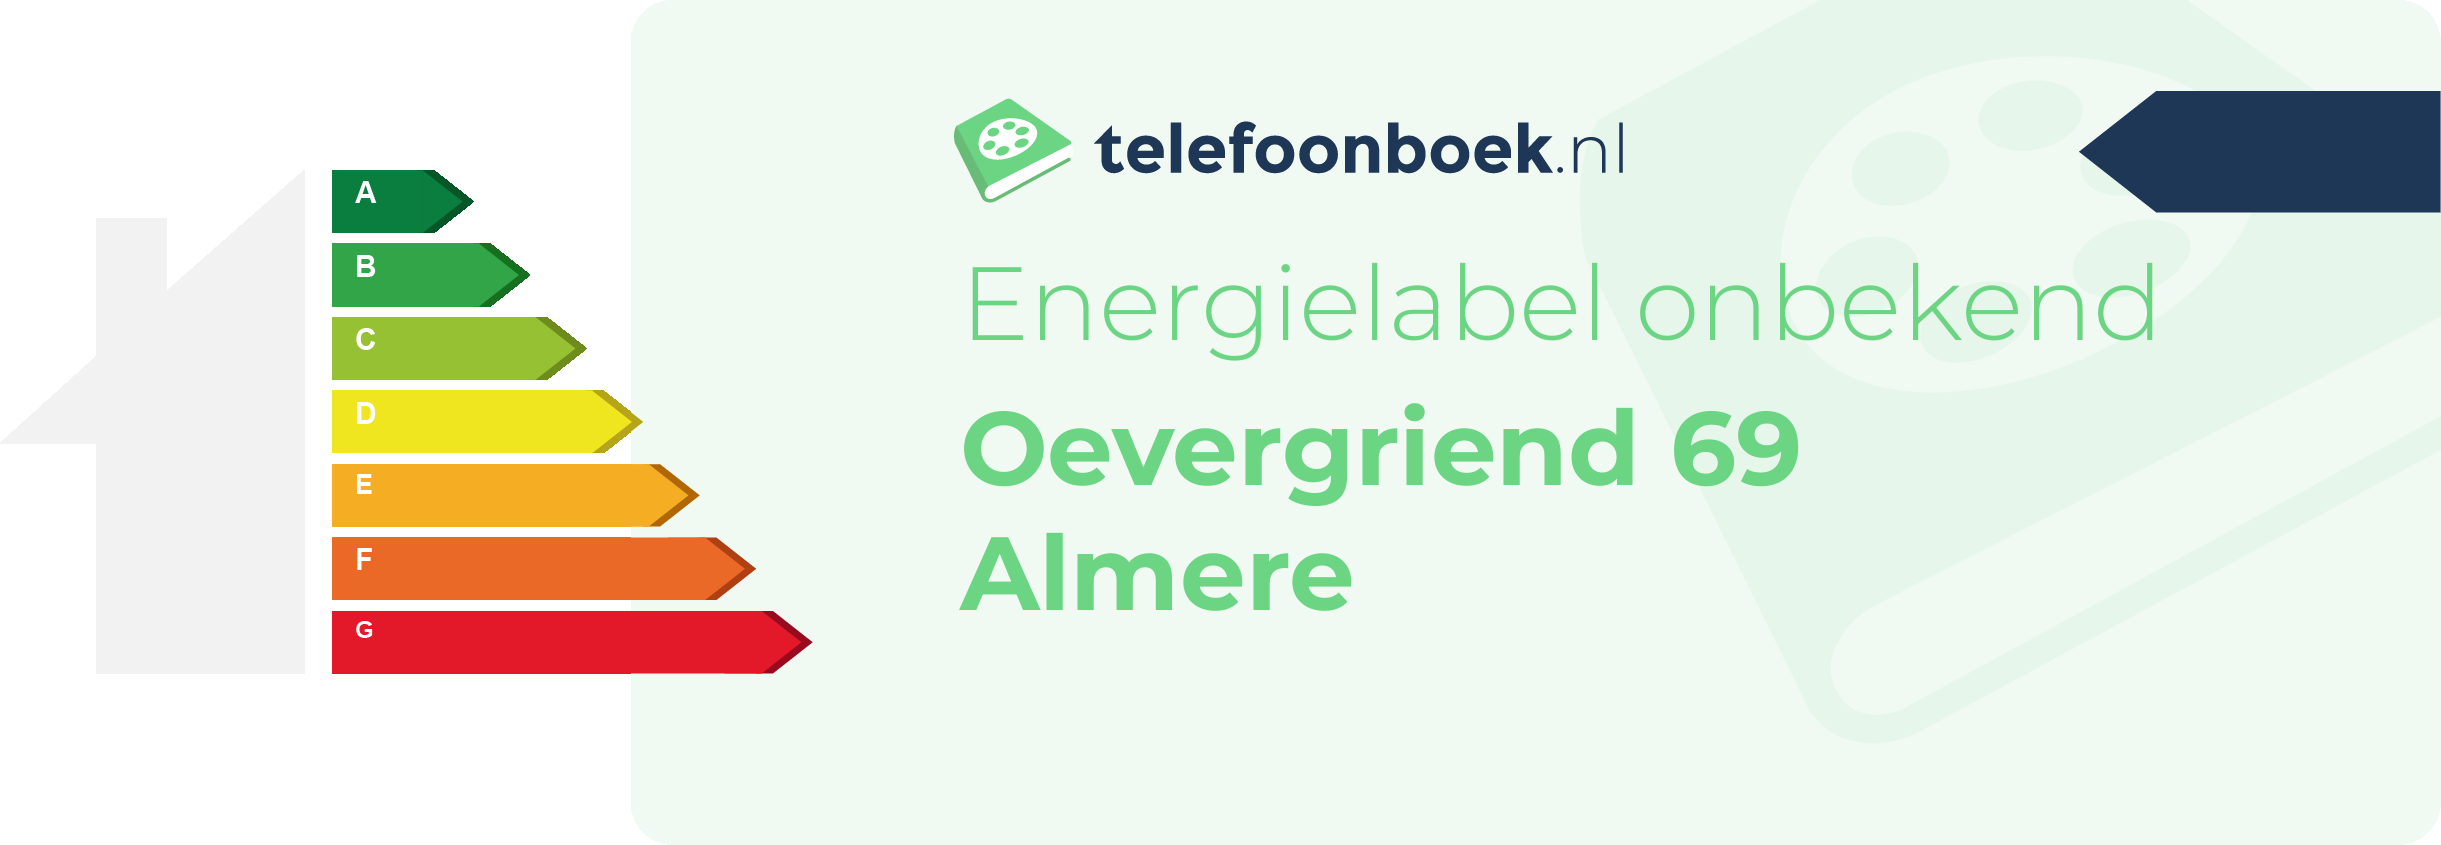 Energielabel Oevergriend 69 Almere